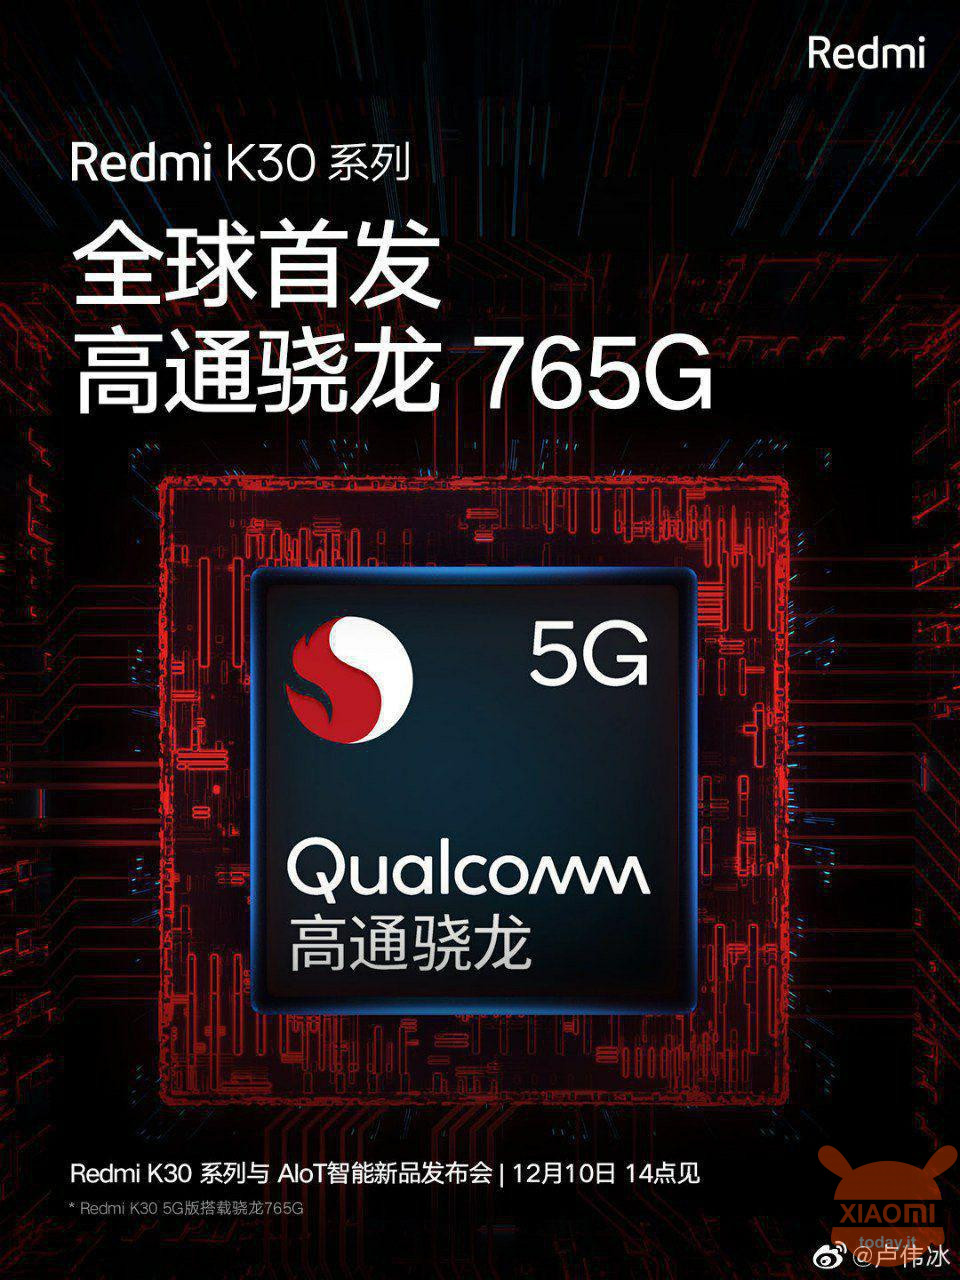 Redmi K30 Qualcomm Snapdragon 765G